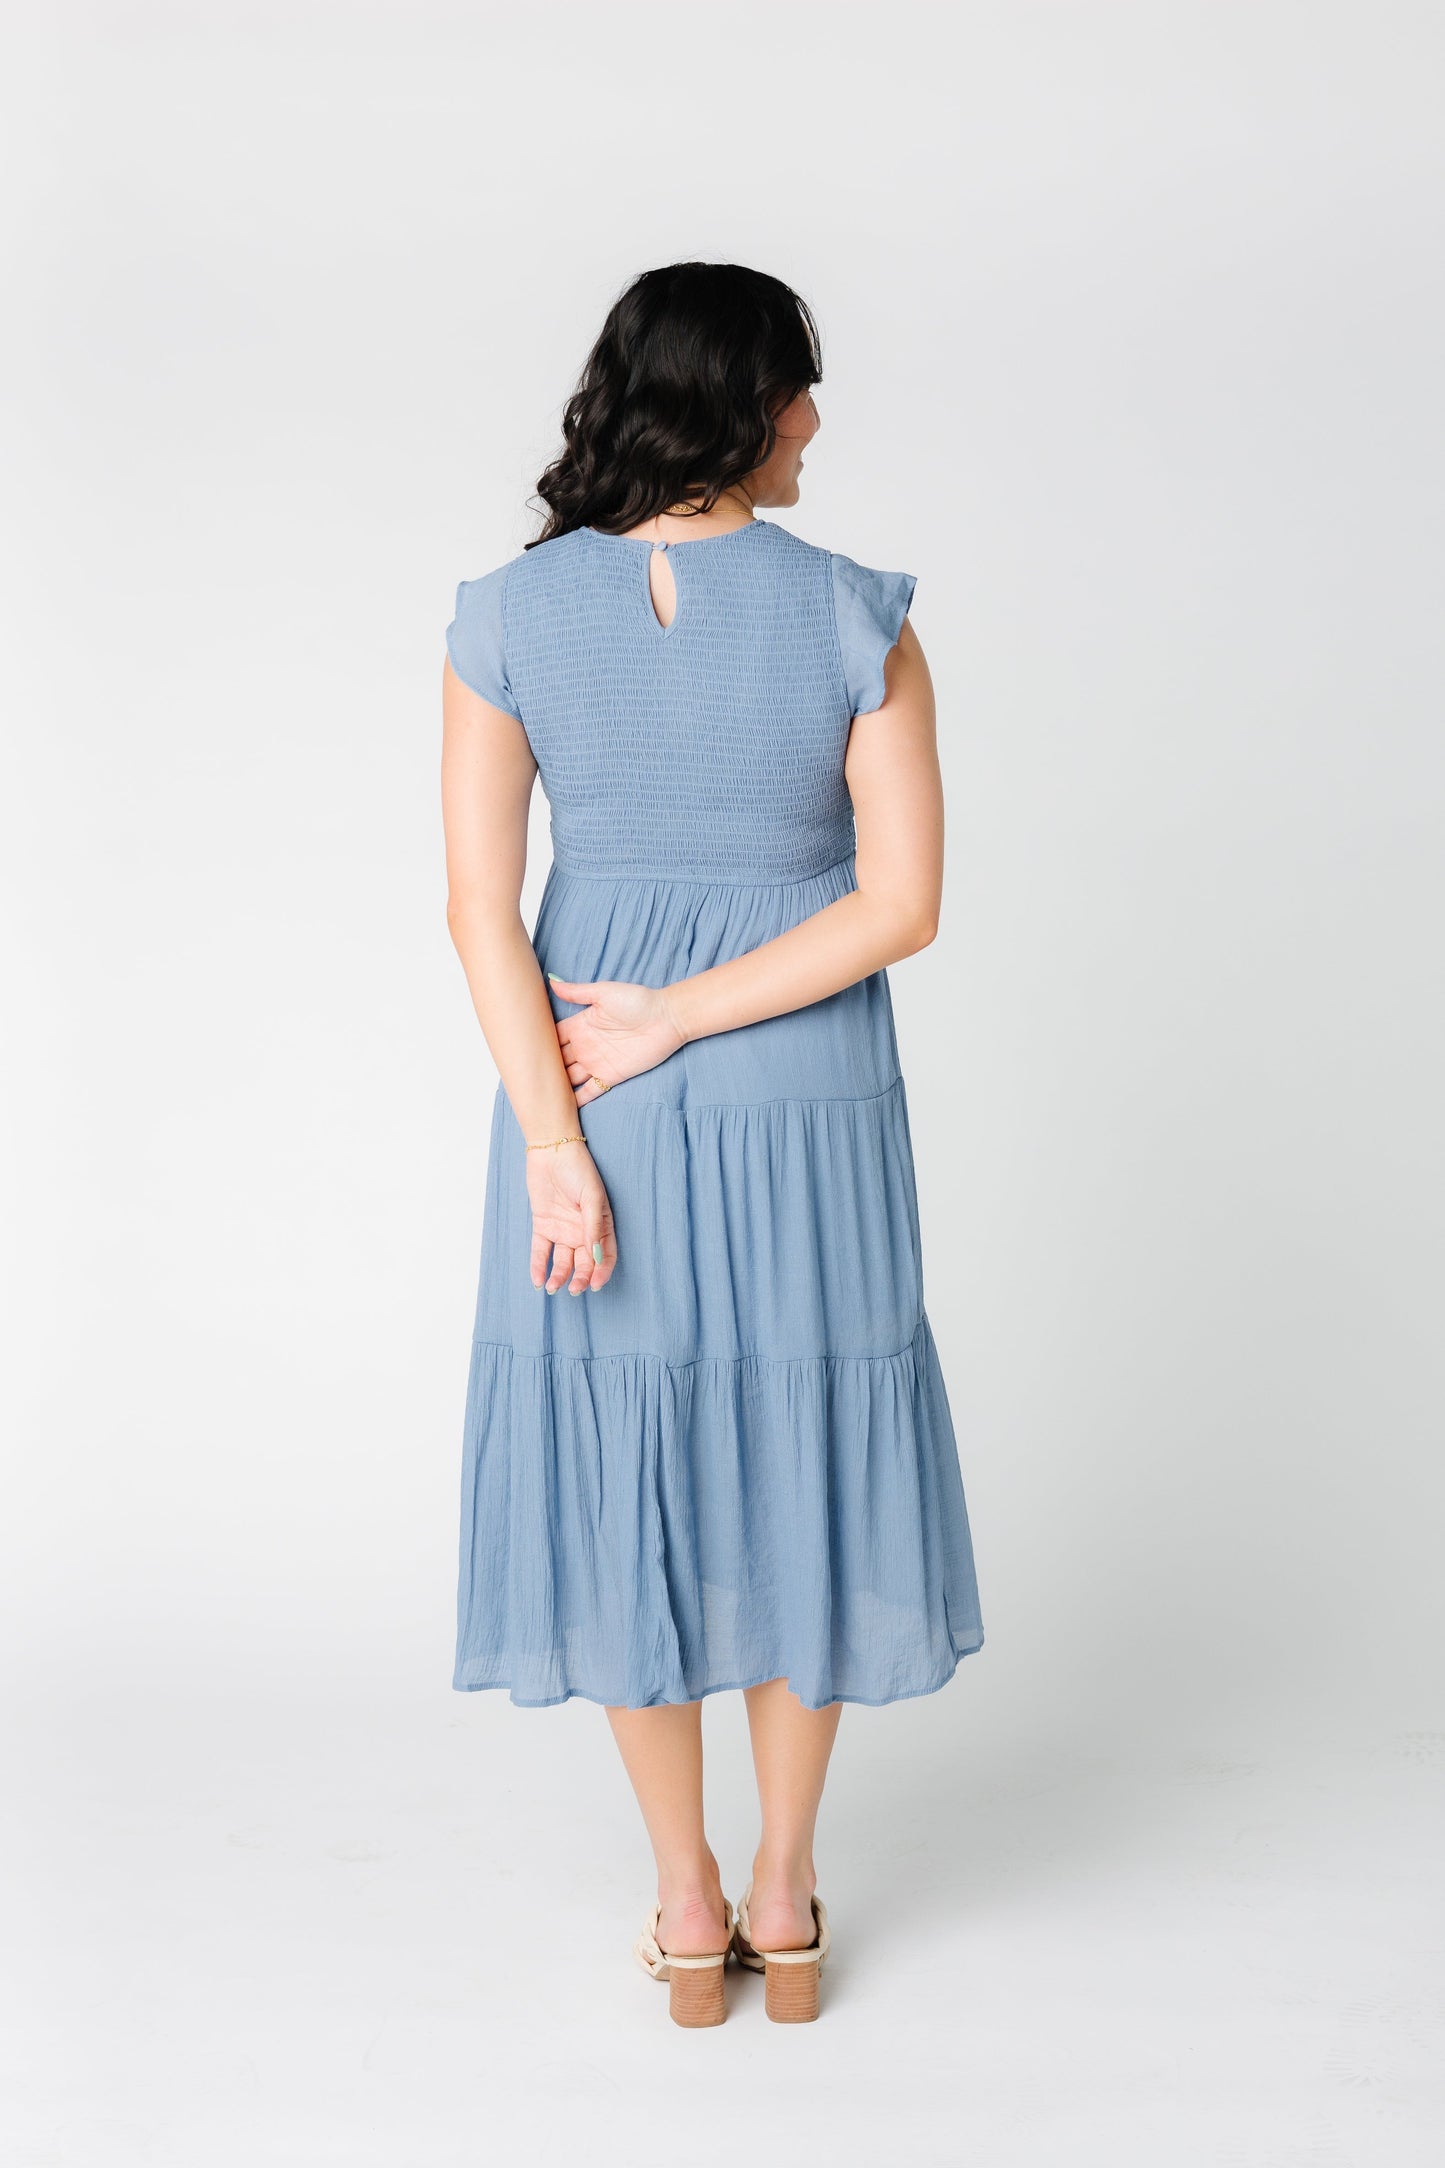 All In Smocked Dress - Blush & Chambray WOMEN'S DRESS Blu Pepper 